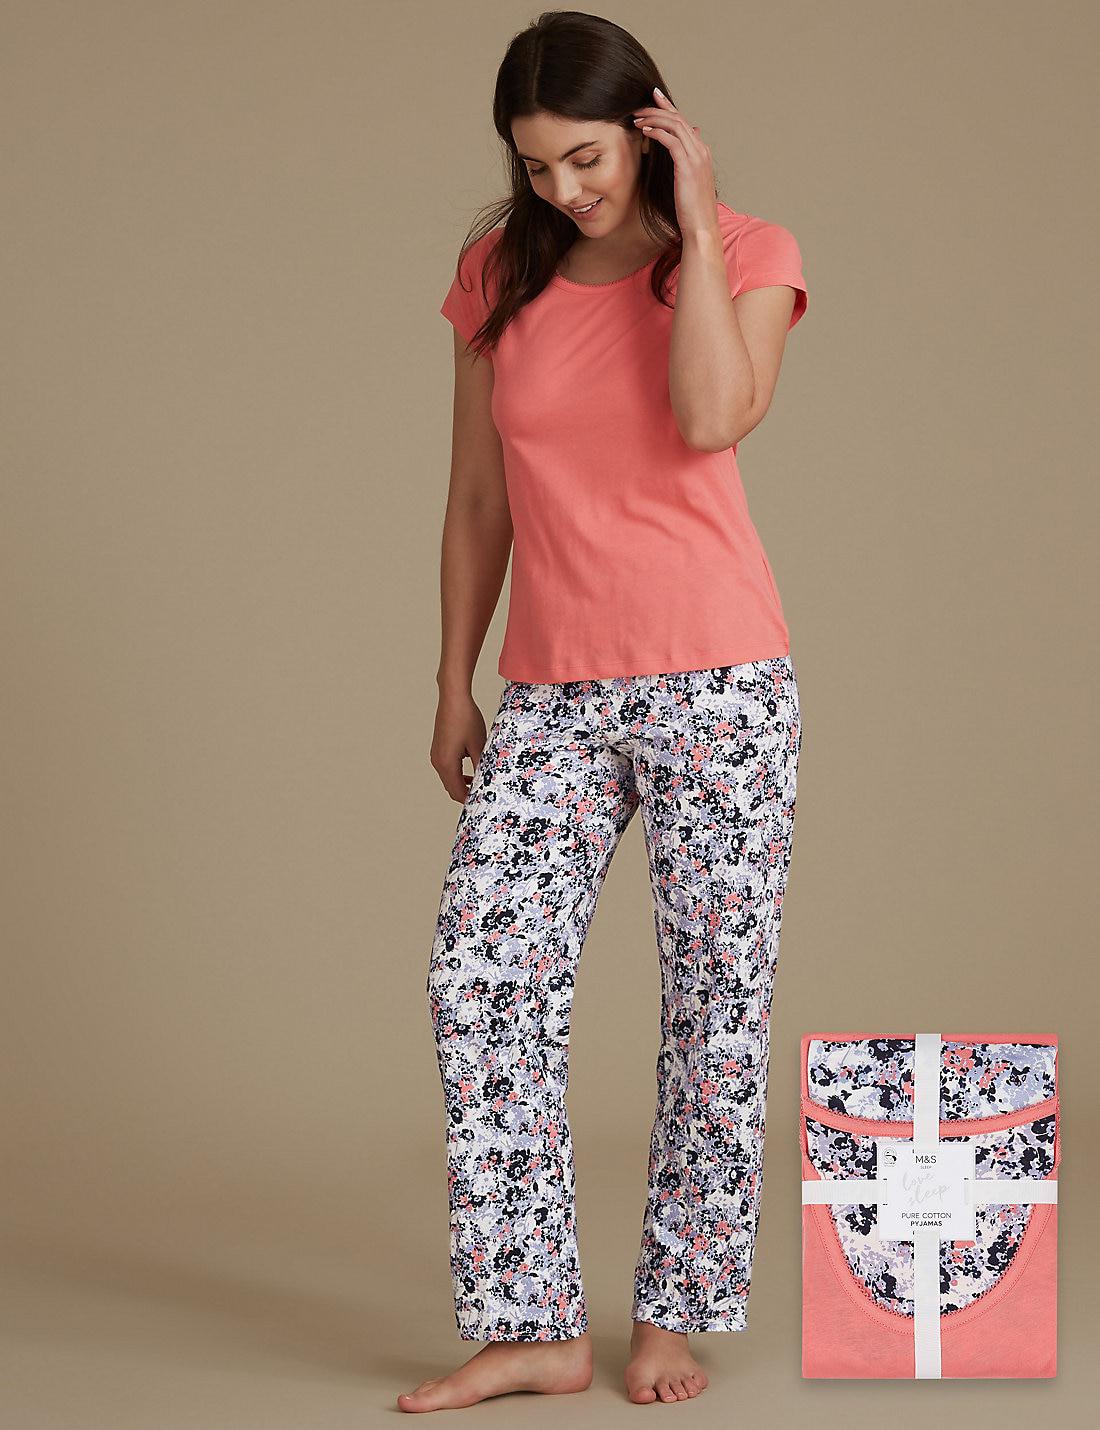 Marks Spencer Pyjamas Flash Sales, 50% OFF | www.ingeniovirtual.com